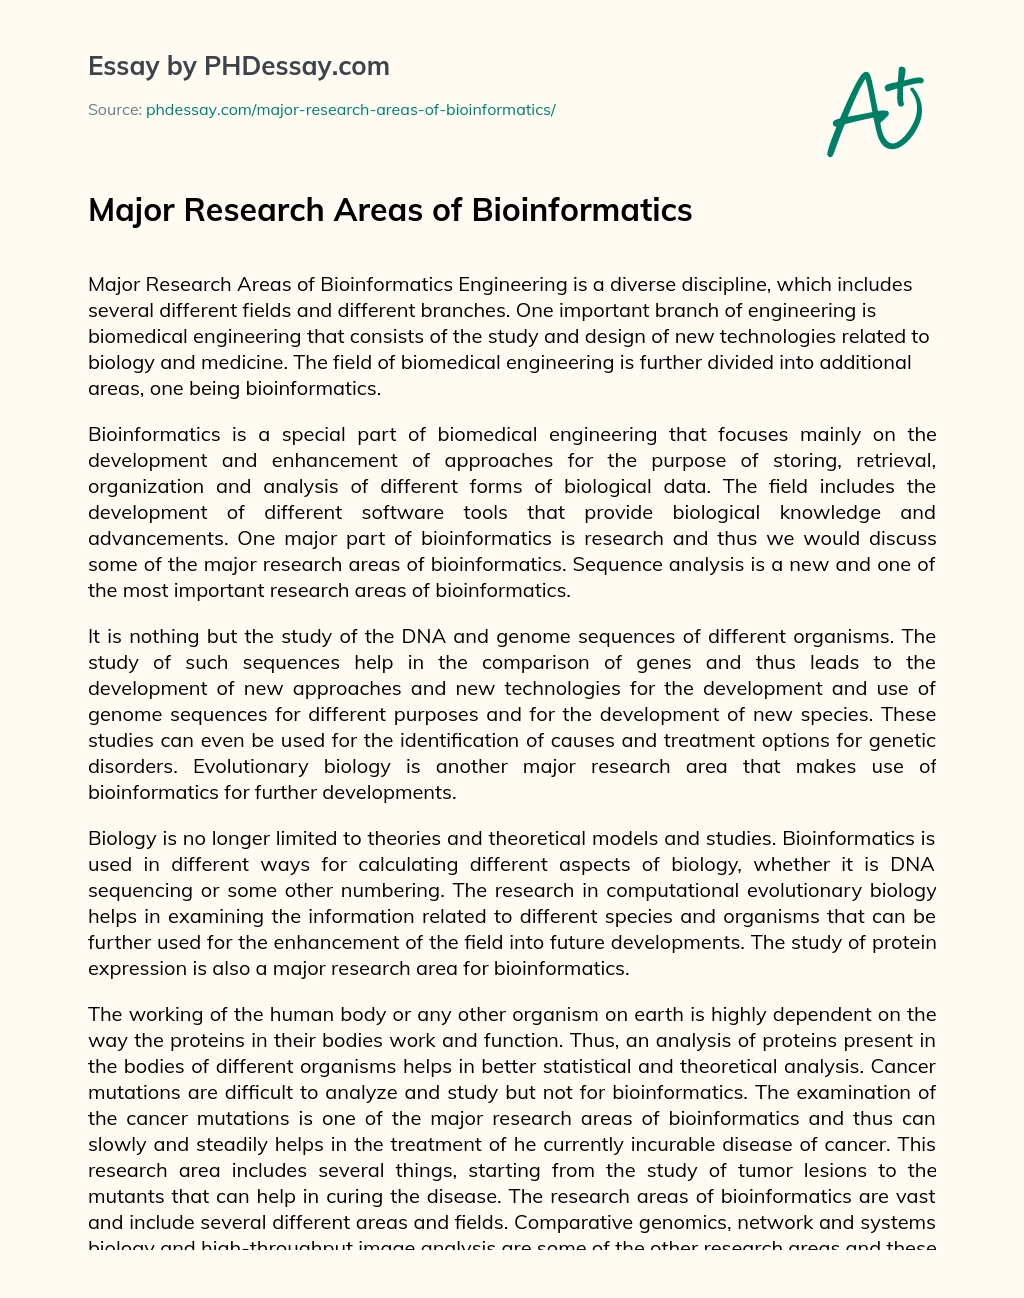 bioinformatics essay